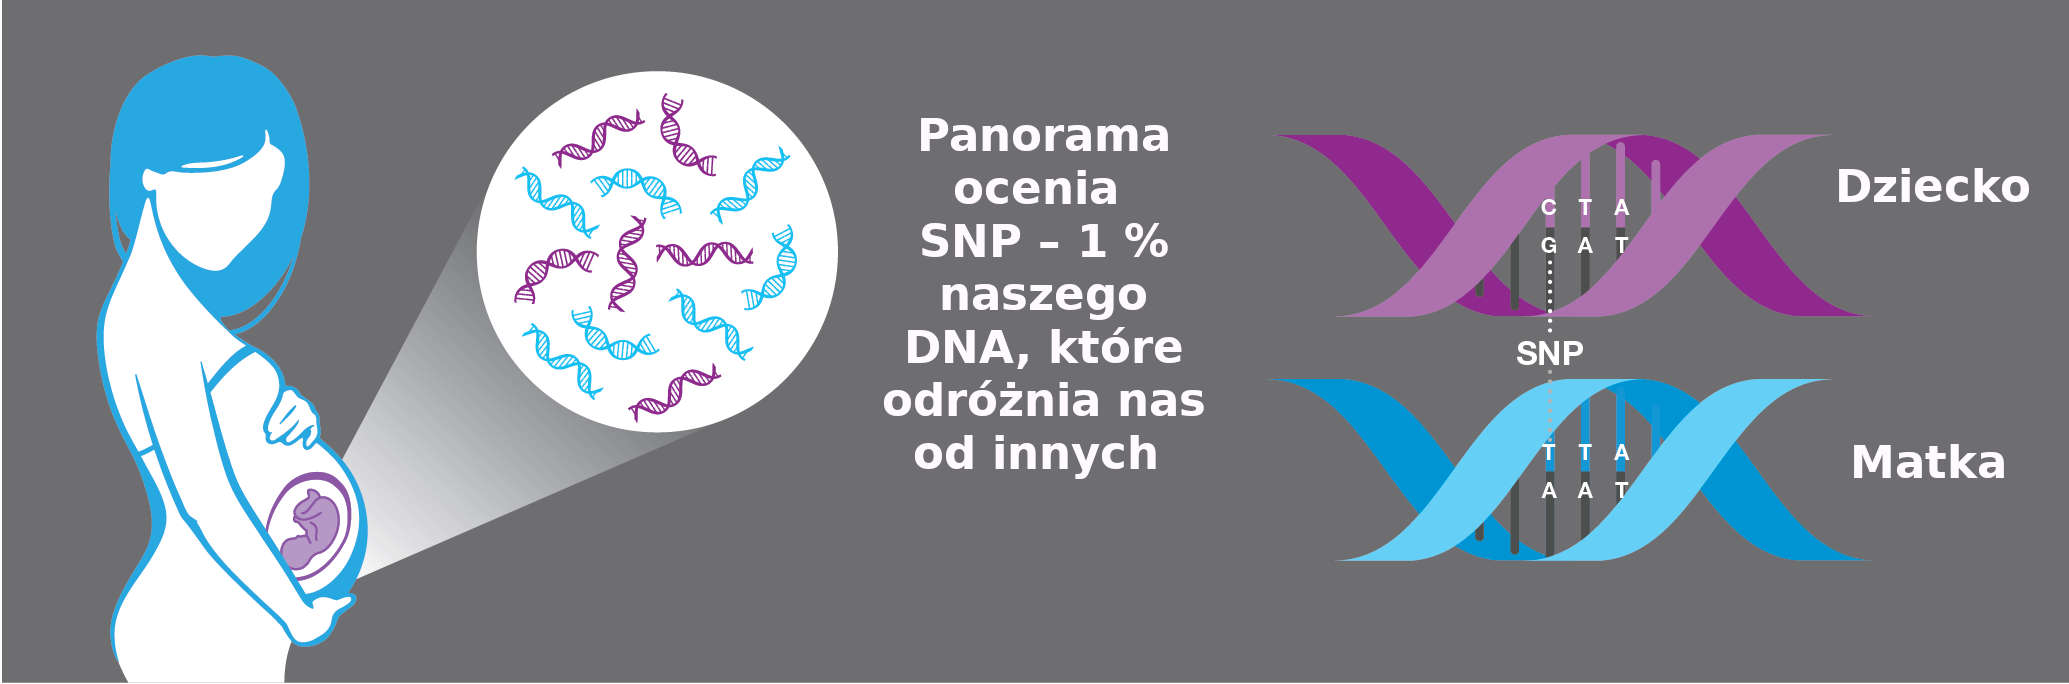 test prenatalny panorama metoda SNP 